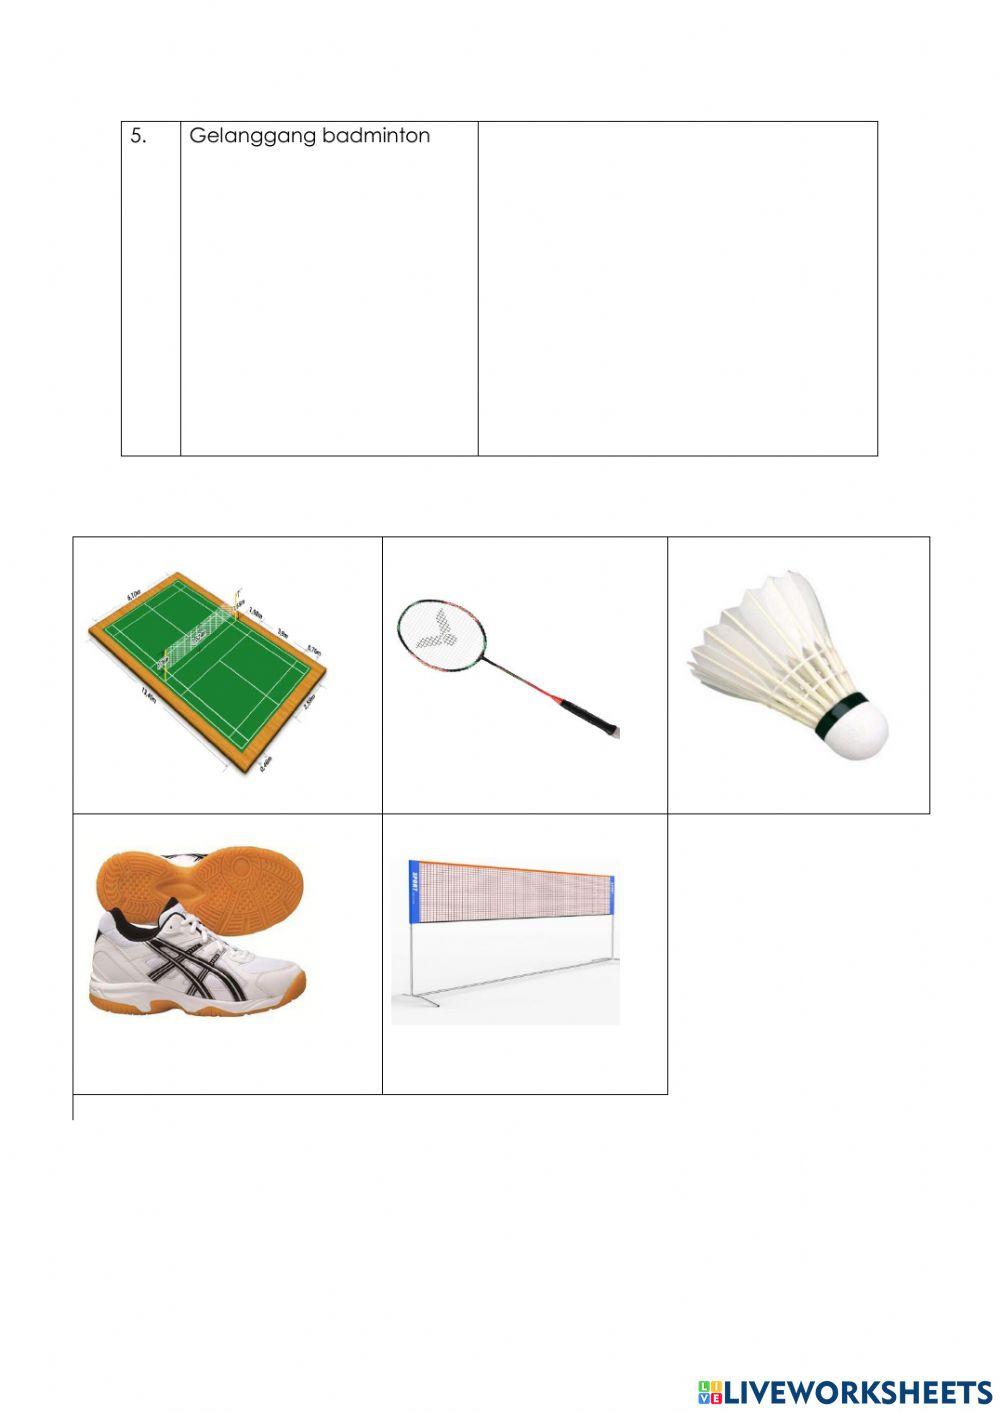 Permainan badminton